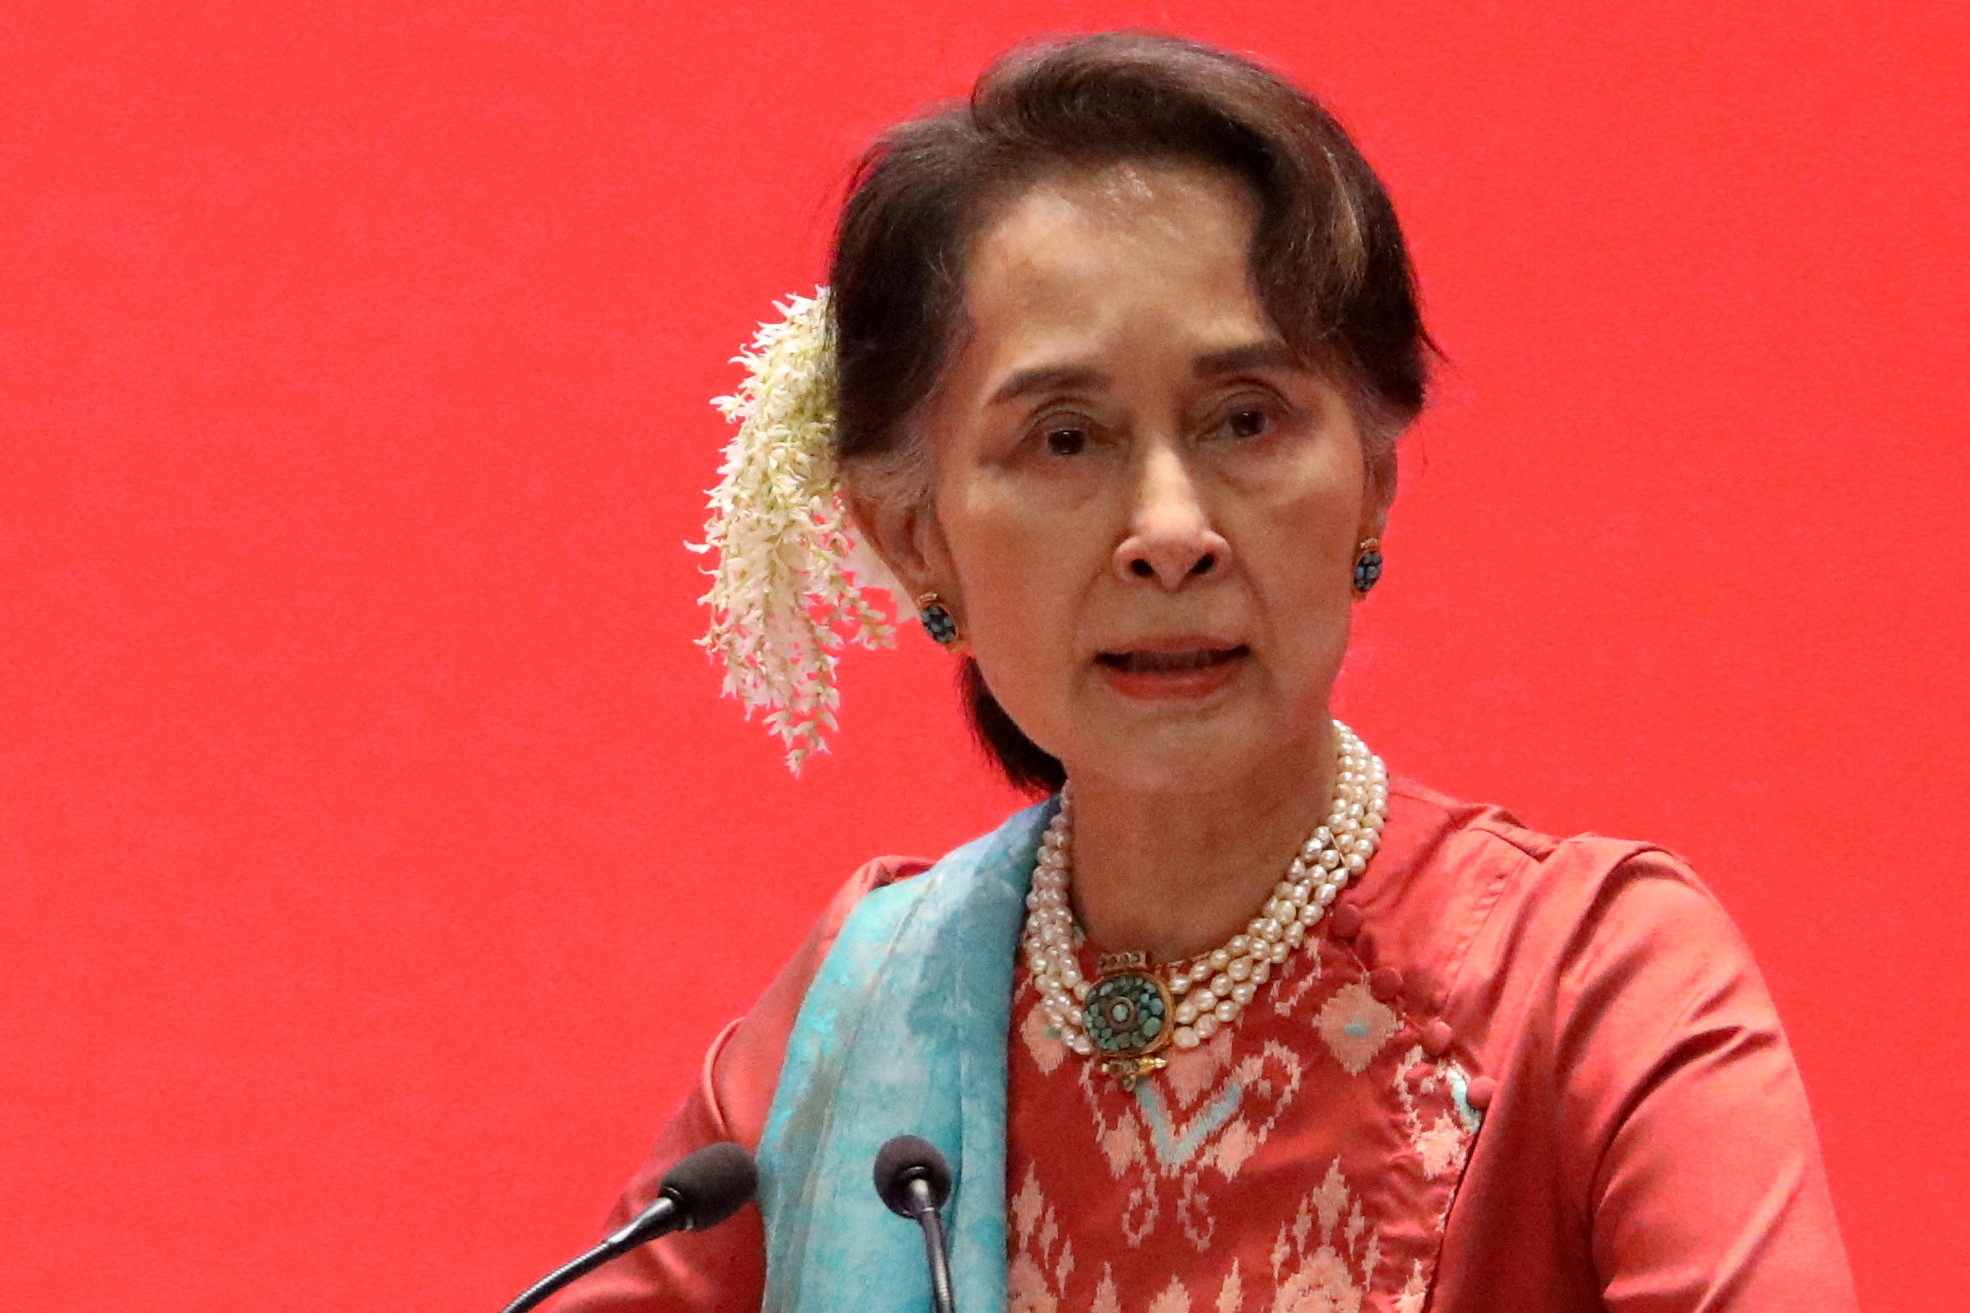 Myanmar's ousted leader Suu Kyi appears in prison uniform in court